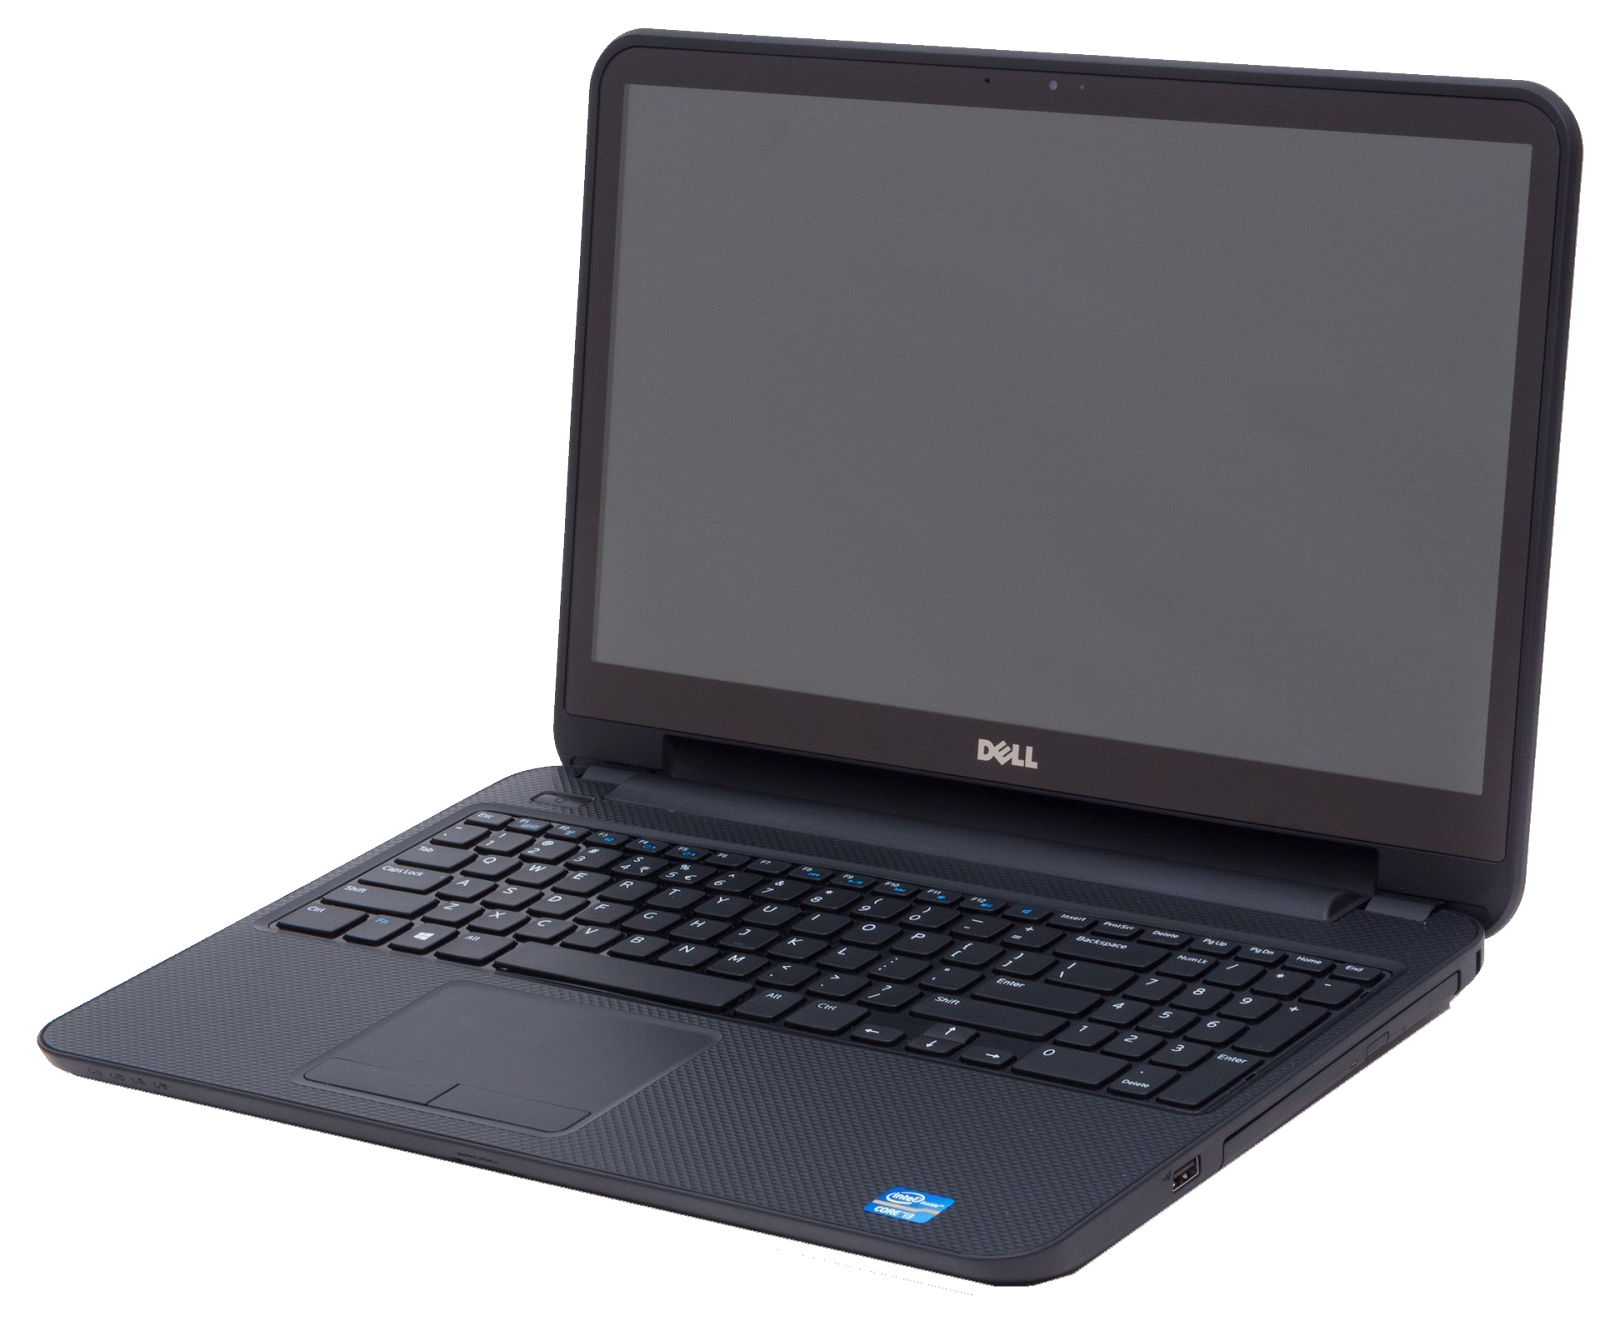 Download PNG image - Dell Laptop PNG Transparent Image 